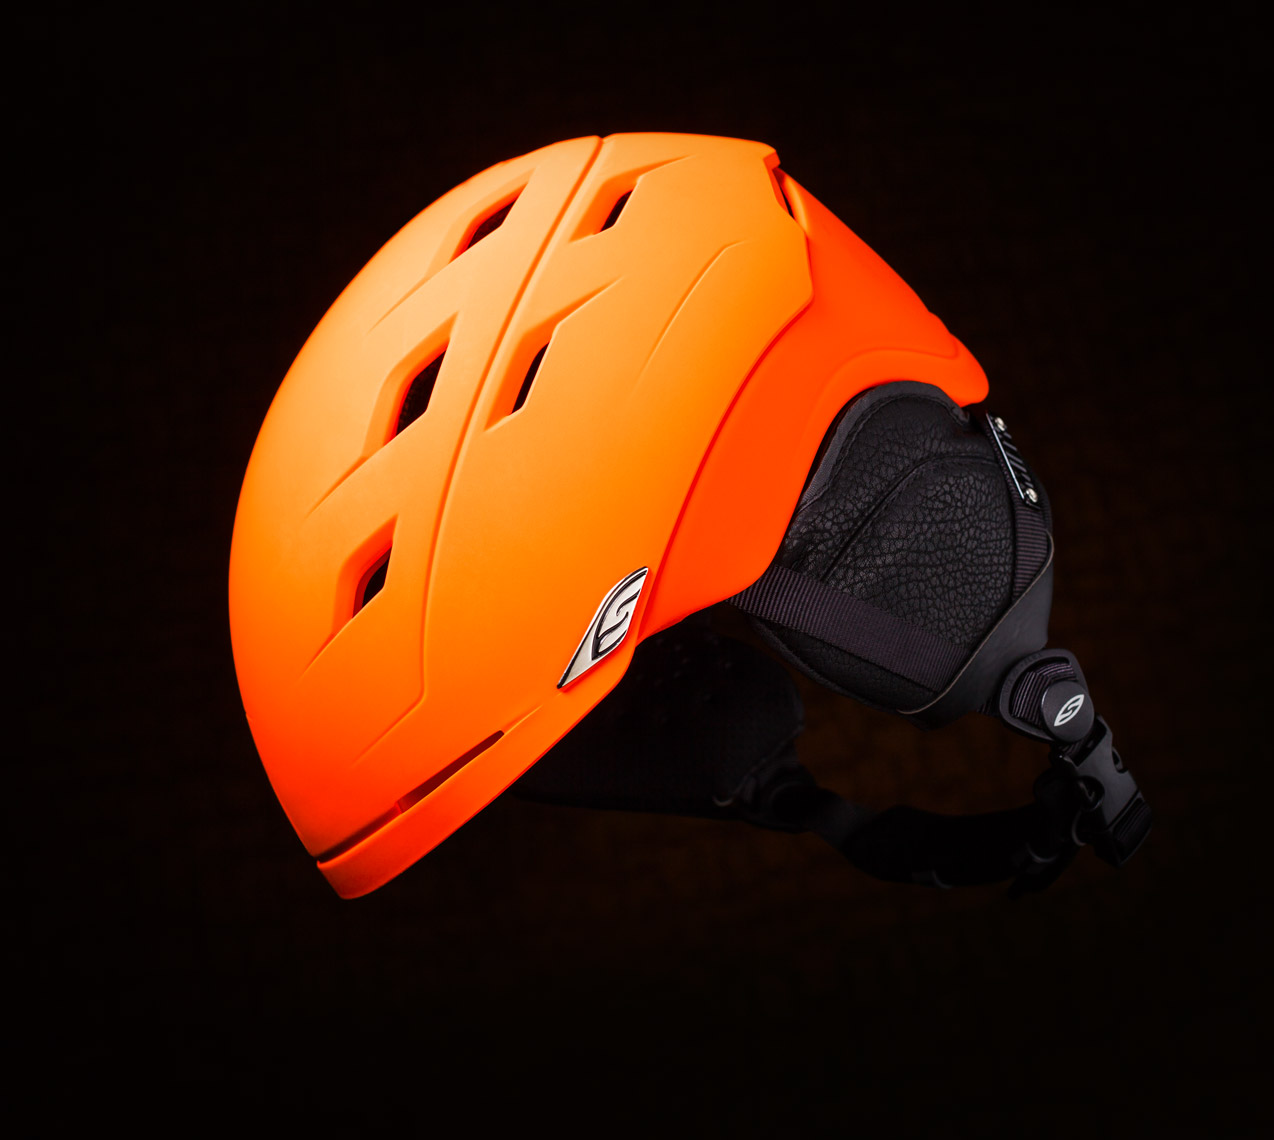 Product Photography Gear Smith Snowboard Helmet Winter Sport Orange Glow Chicago Denver St. Louis  